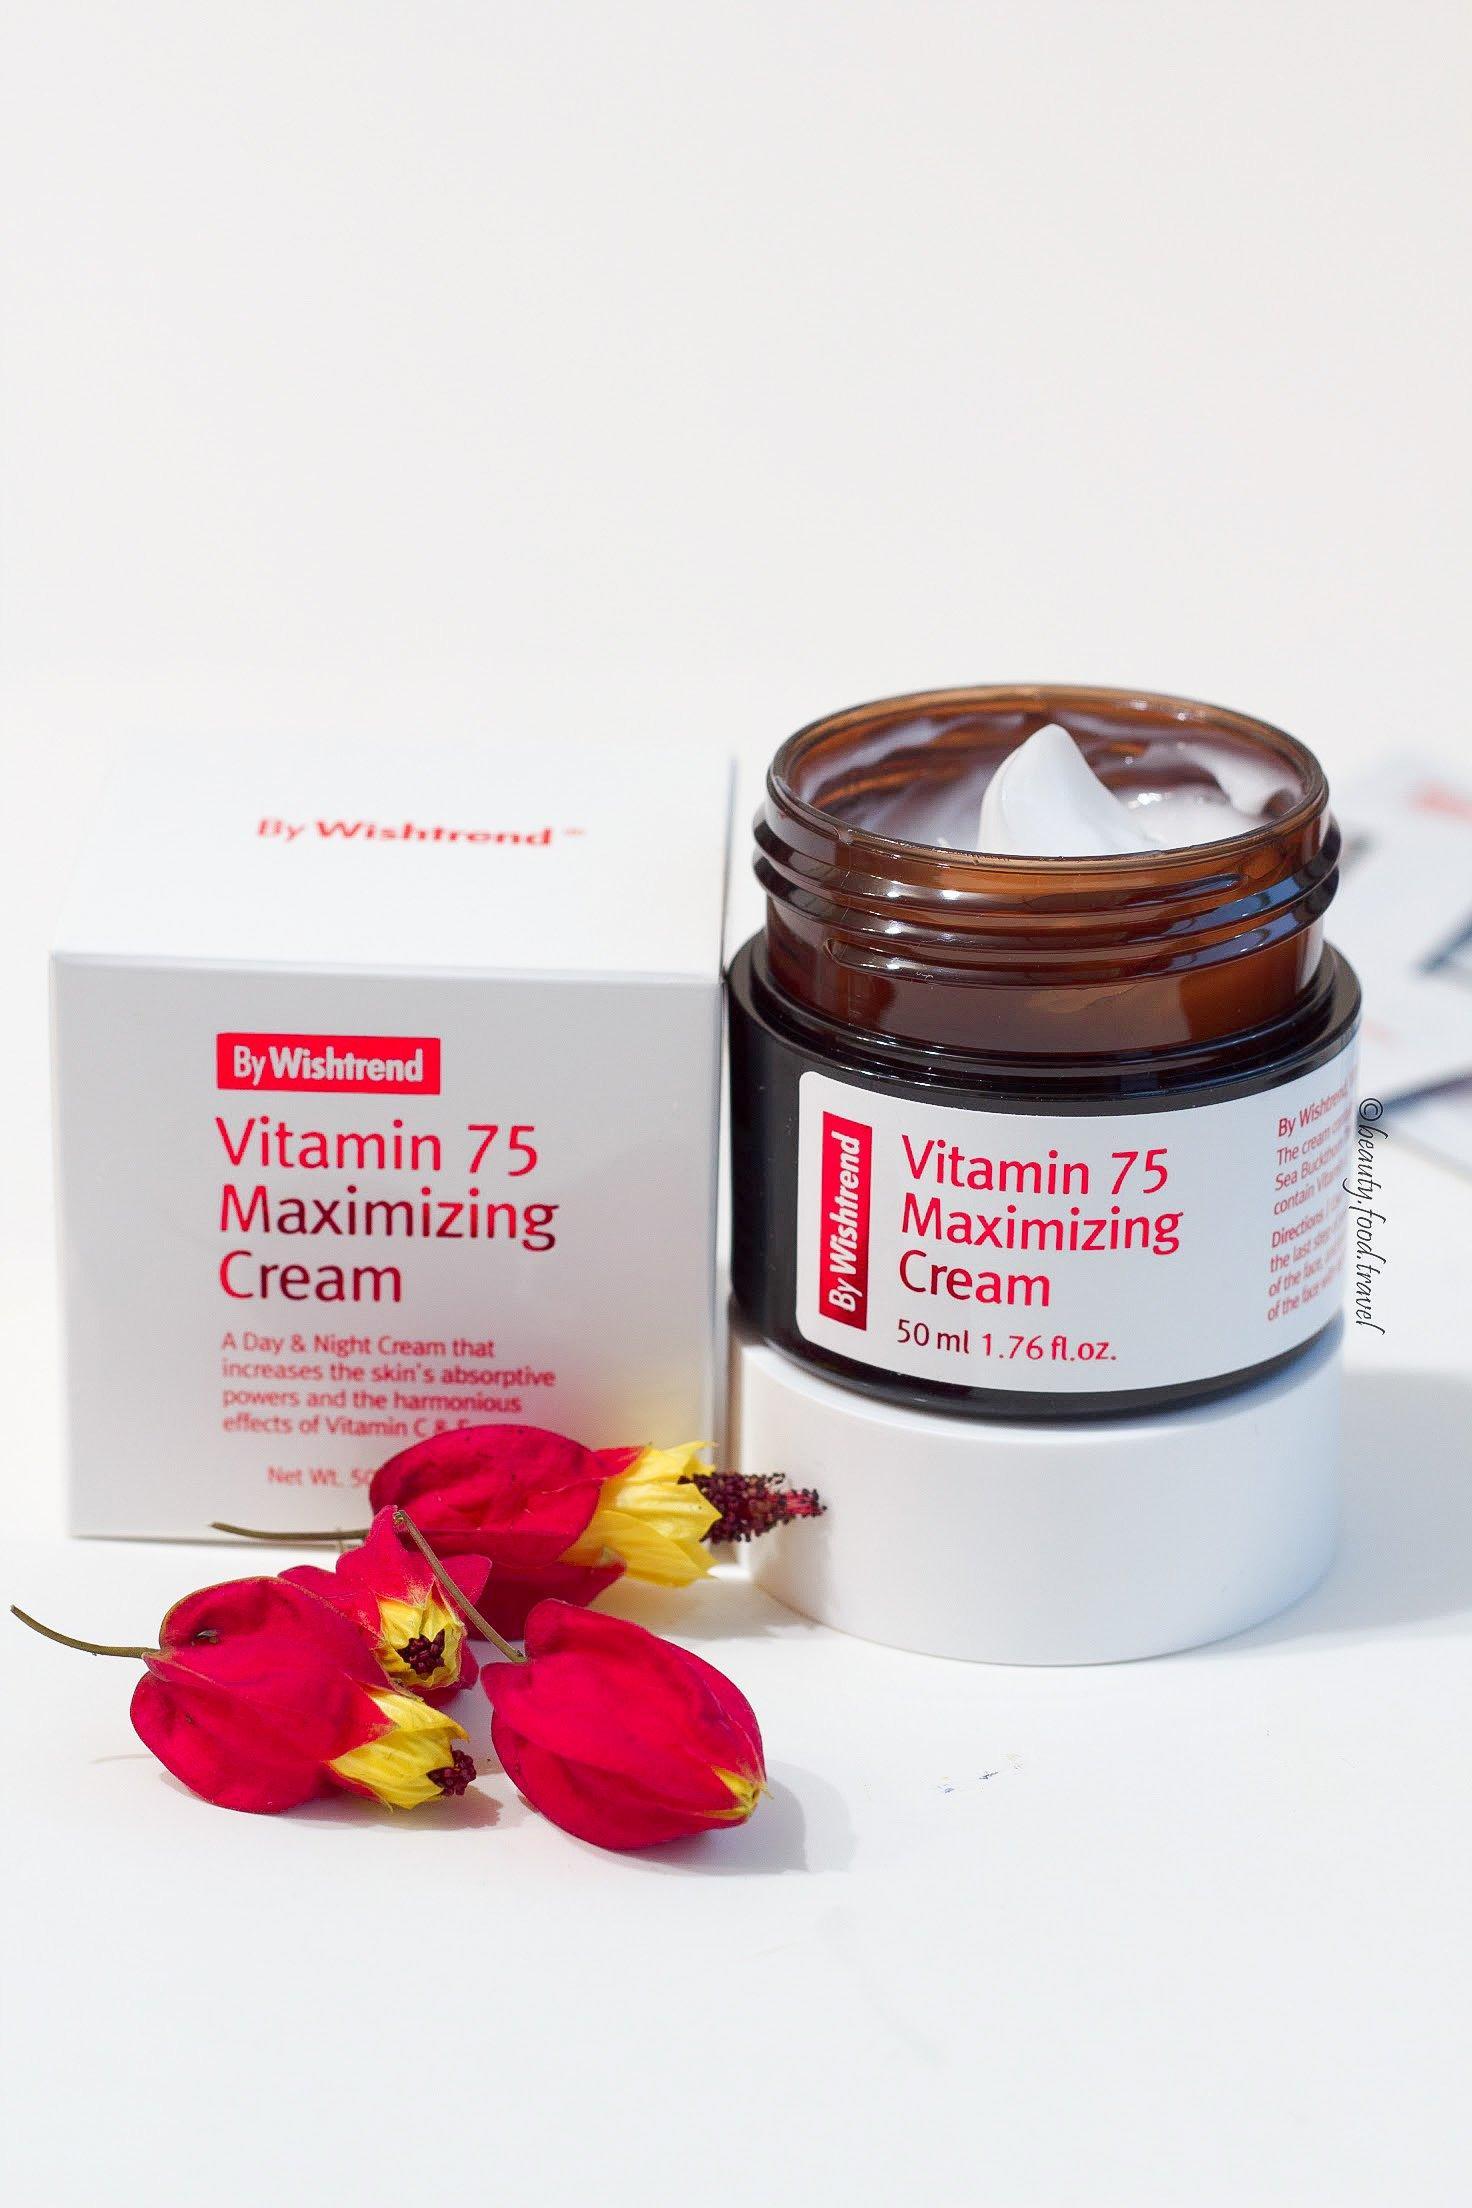 BY WISHTREND Vitamin 75 Maximizing Cream 50ml -1